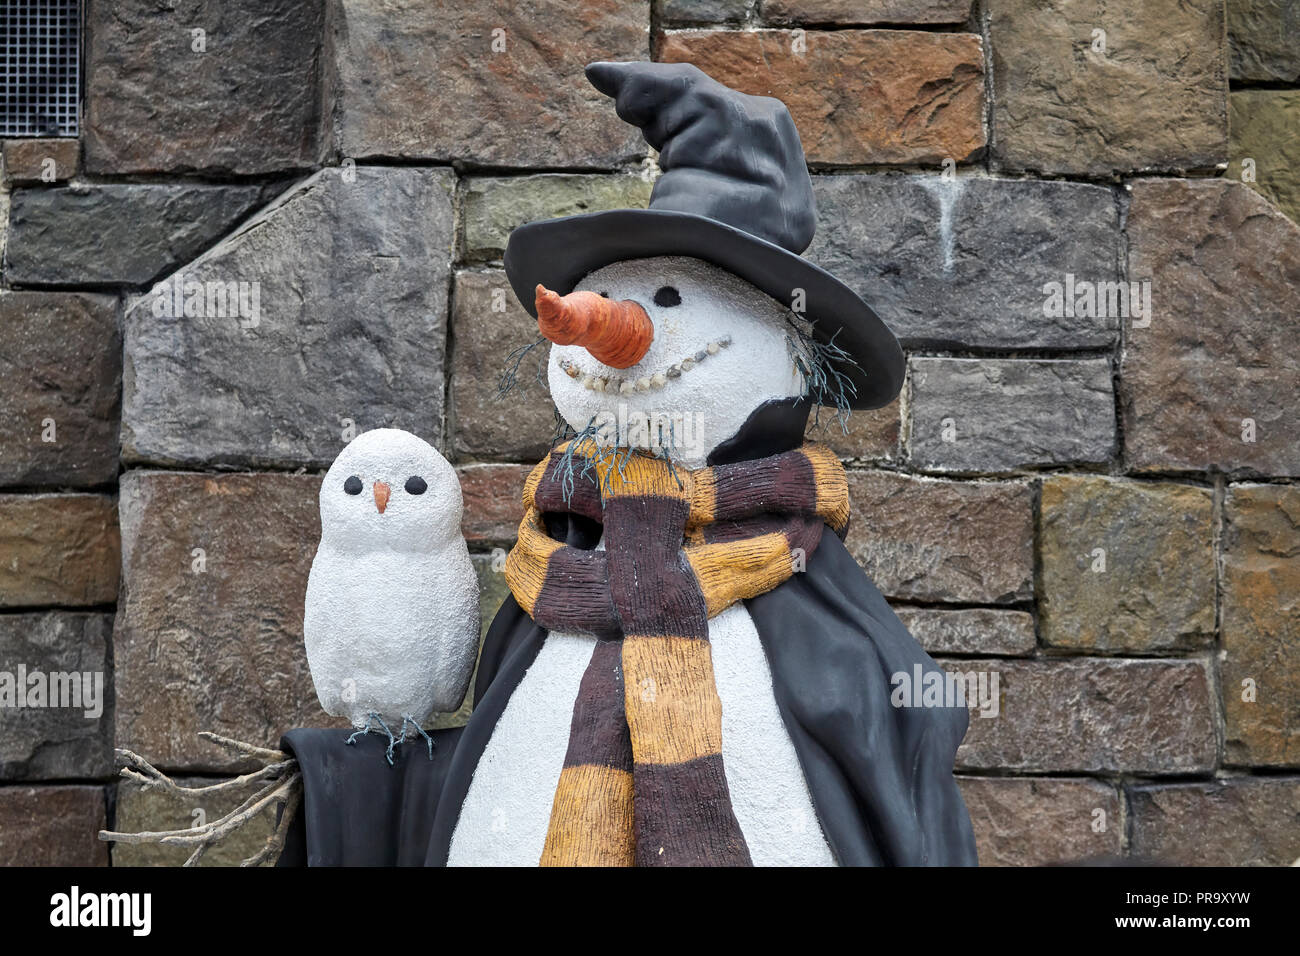 Snowman inside Harry Potter world, Universal studios, Orlando Florida Stock Photo